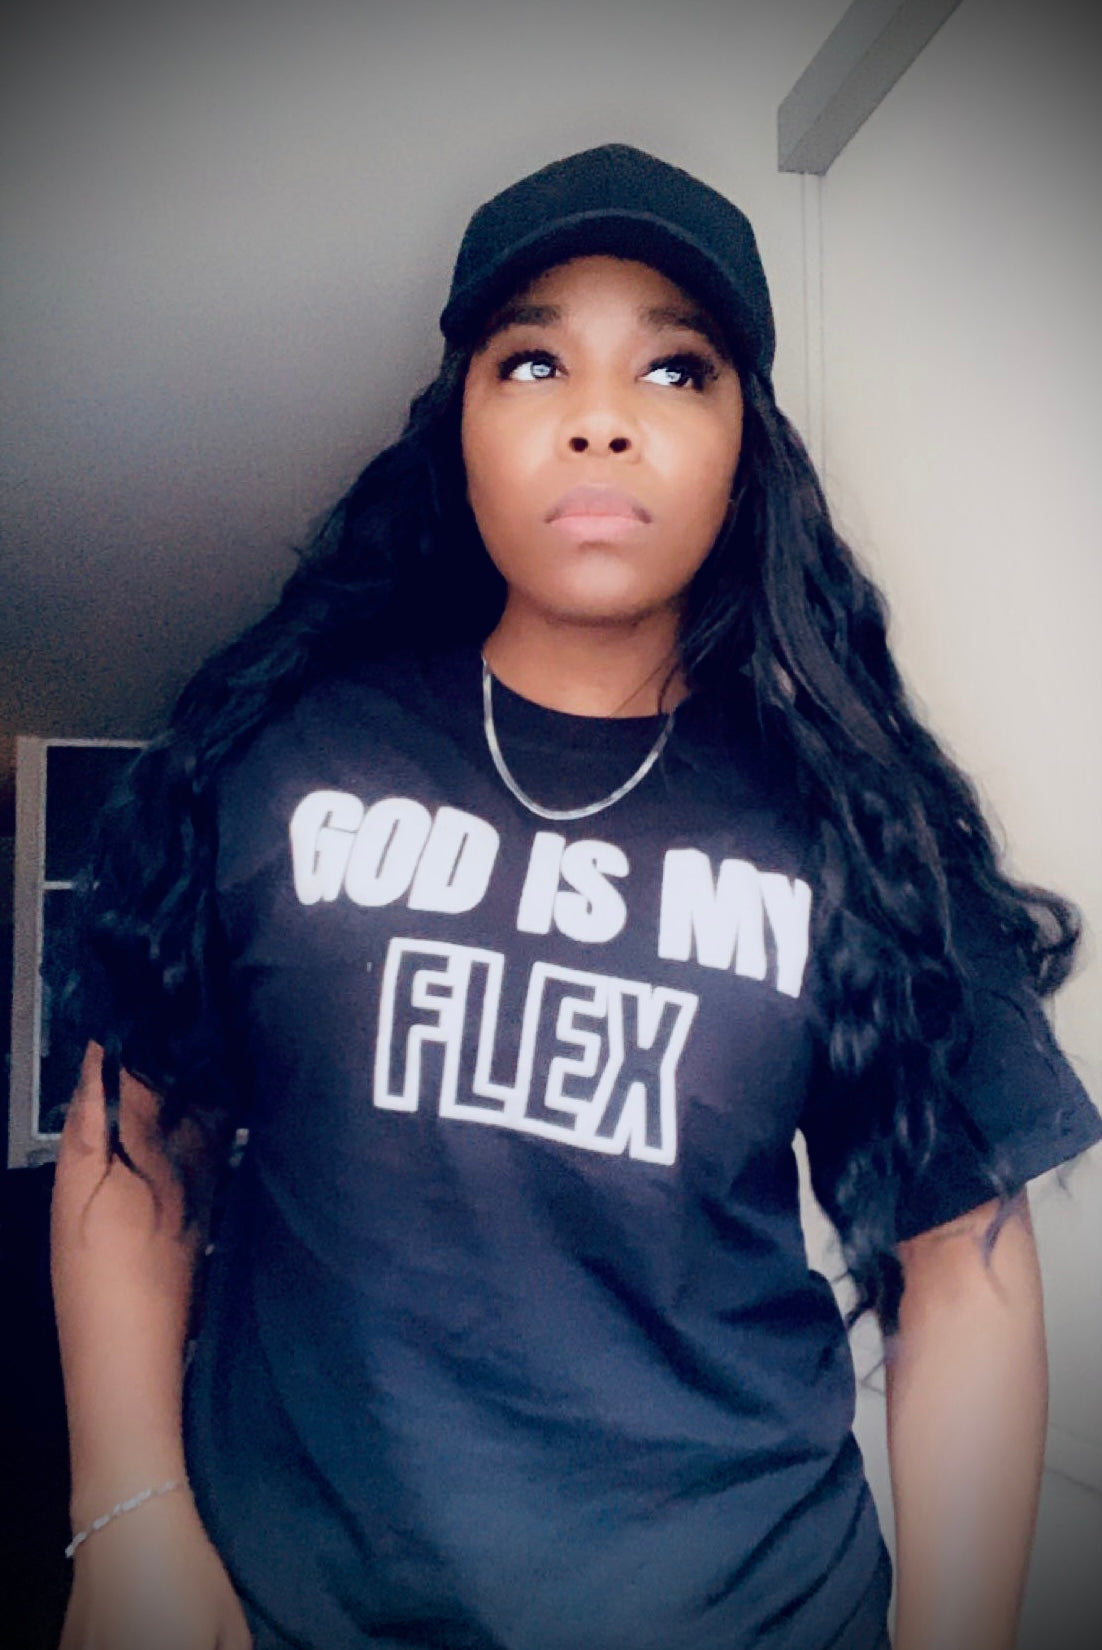 Christian Doèr - God Is My Flex Design